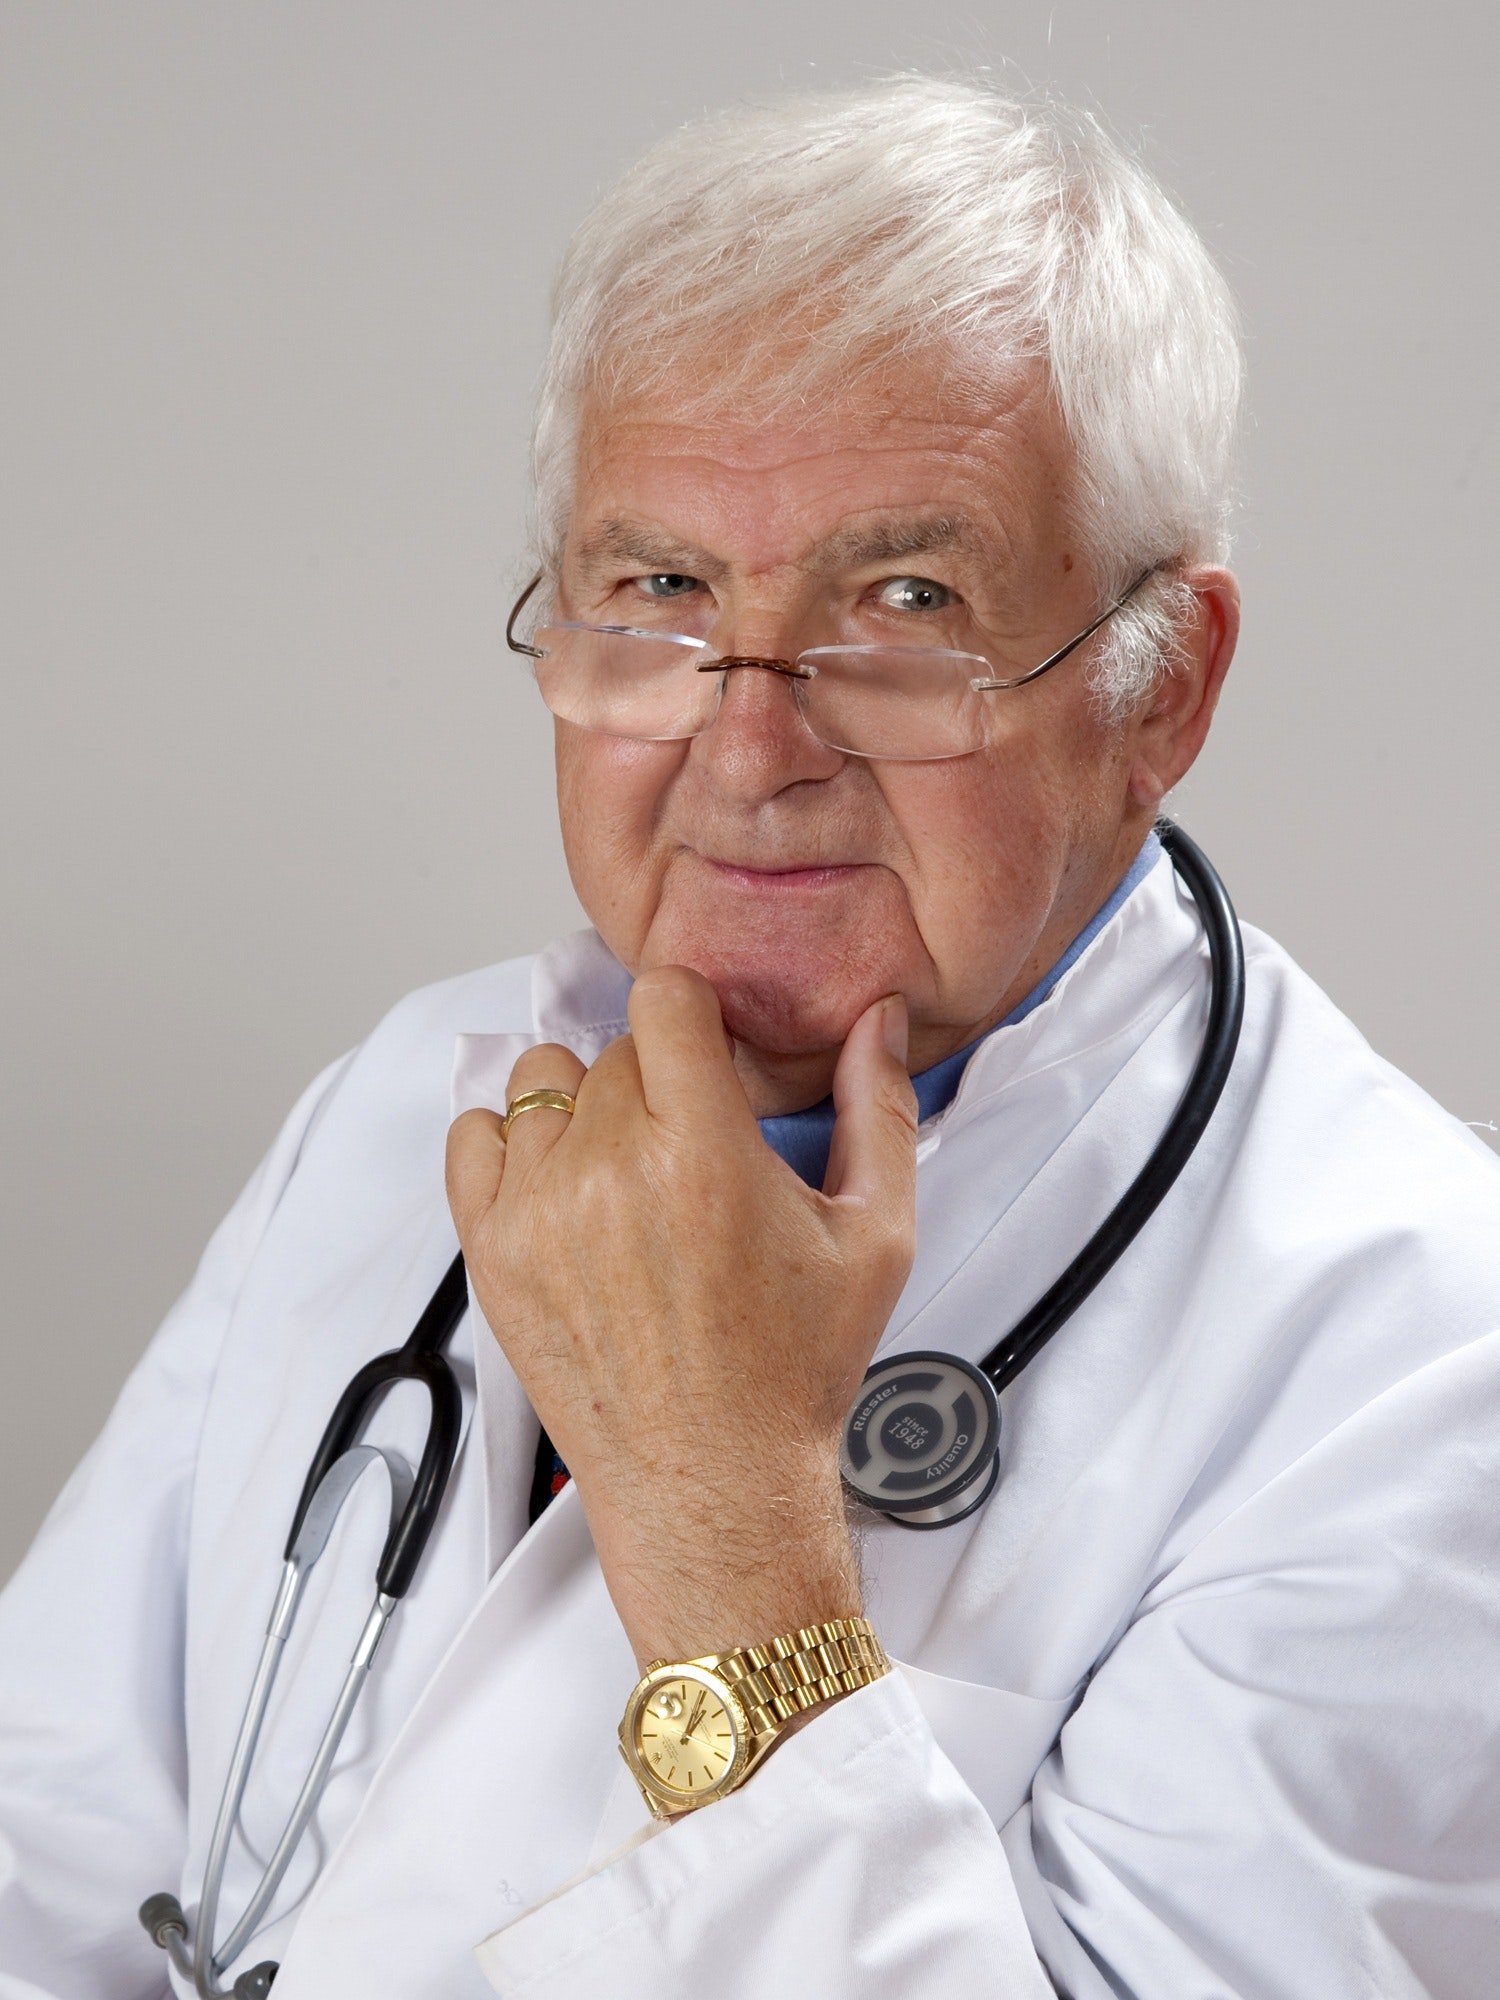 Senior doctor. | Source: Pixabay